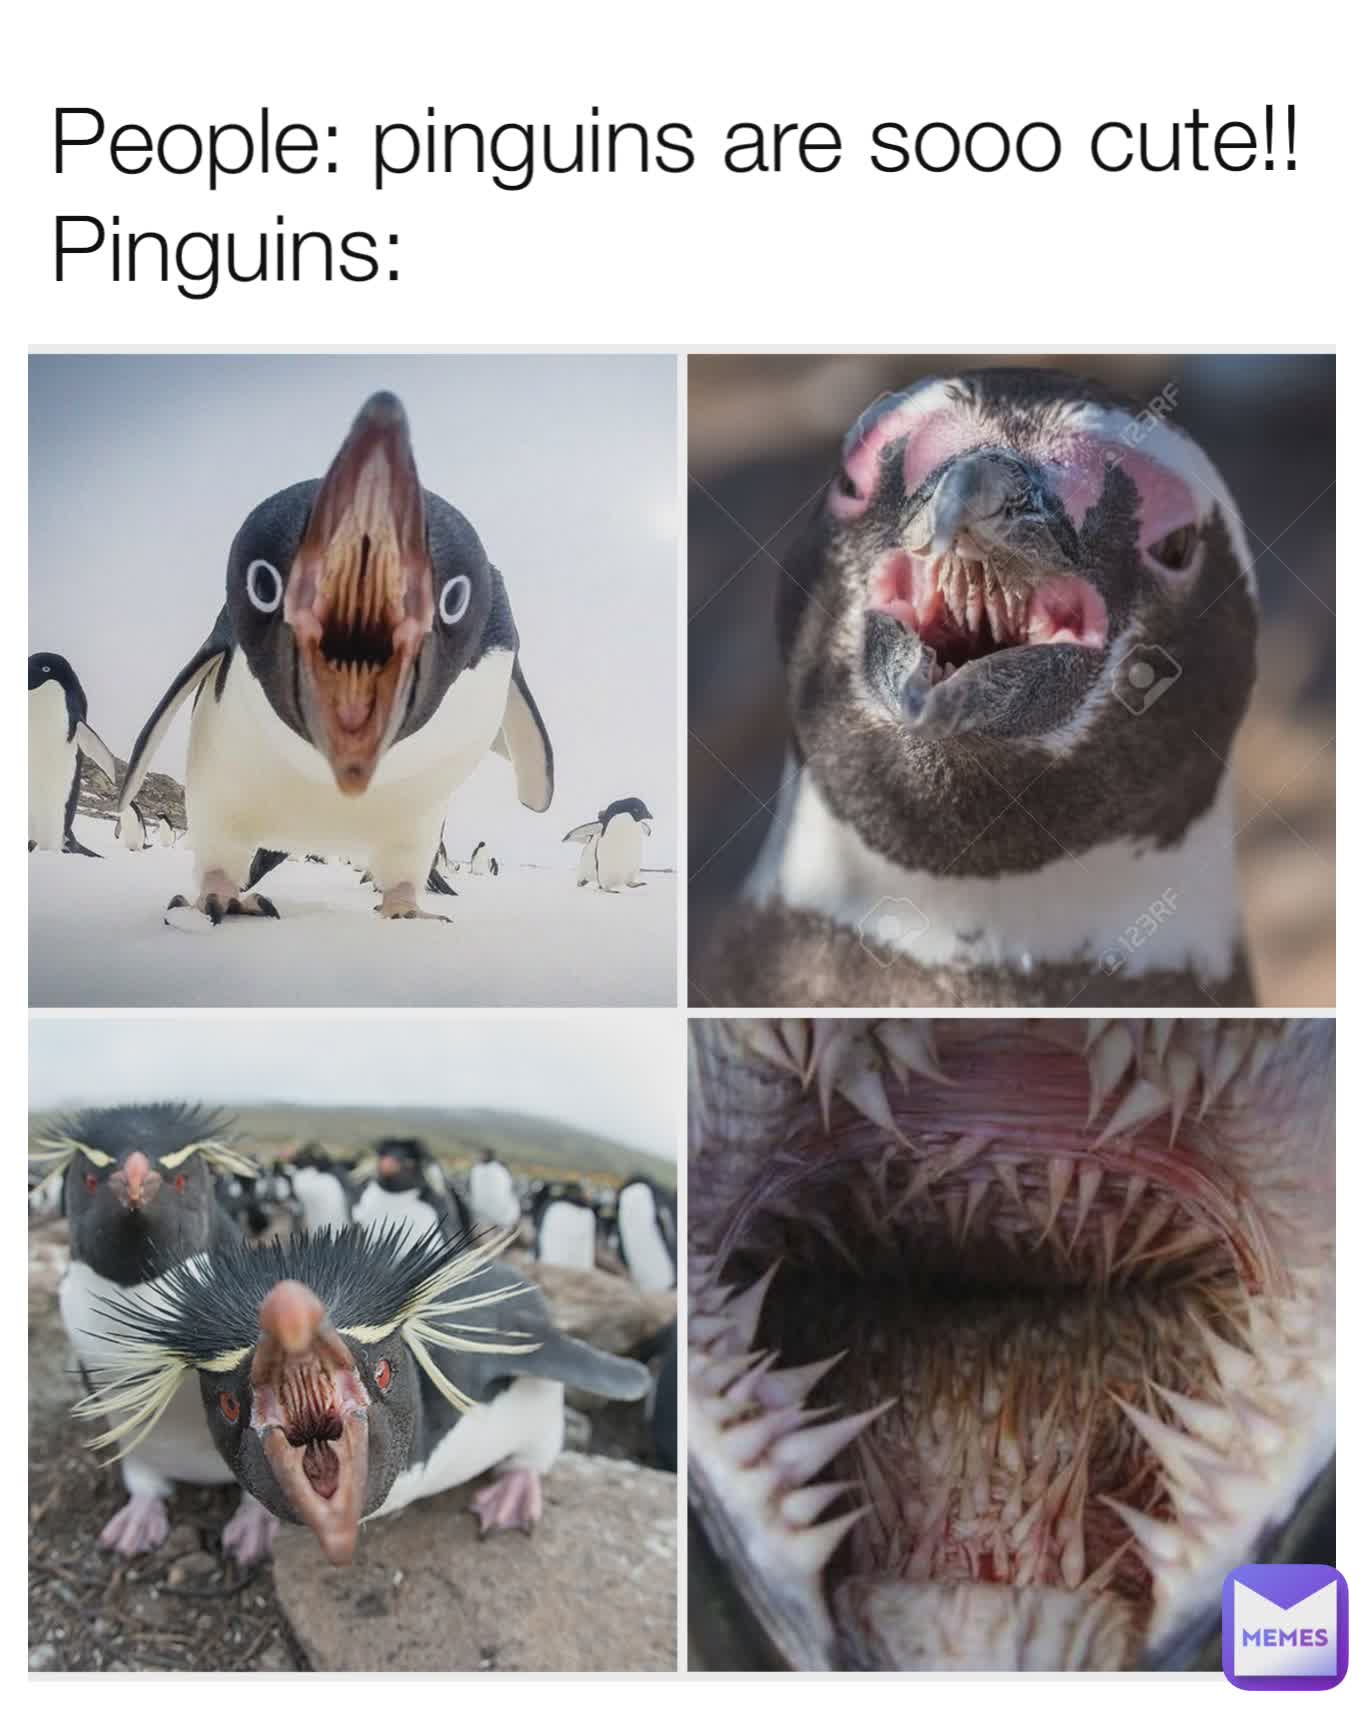 People: pinguins are sooo cute!!
Pinguins: